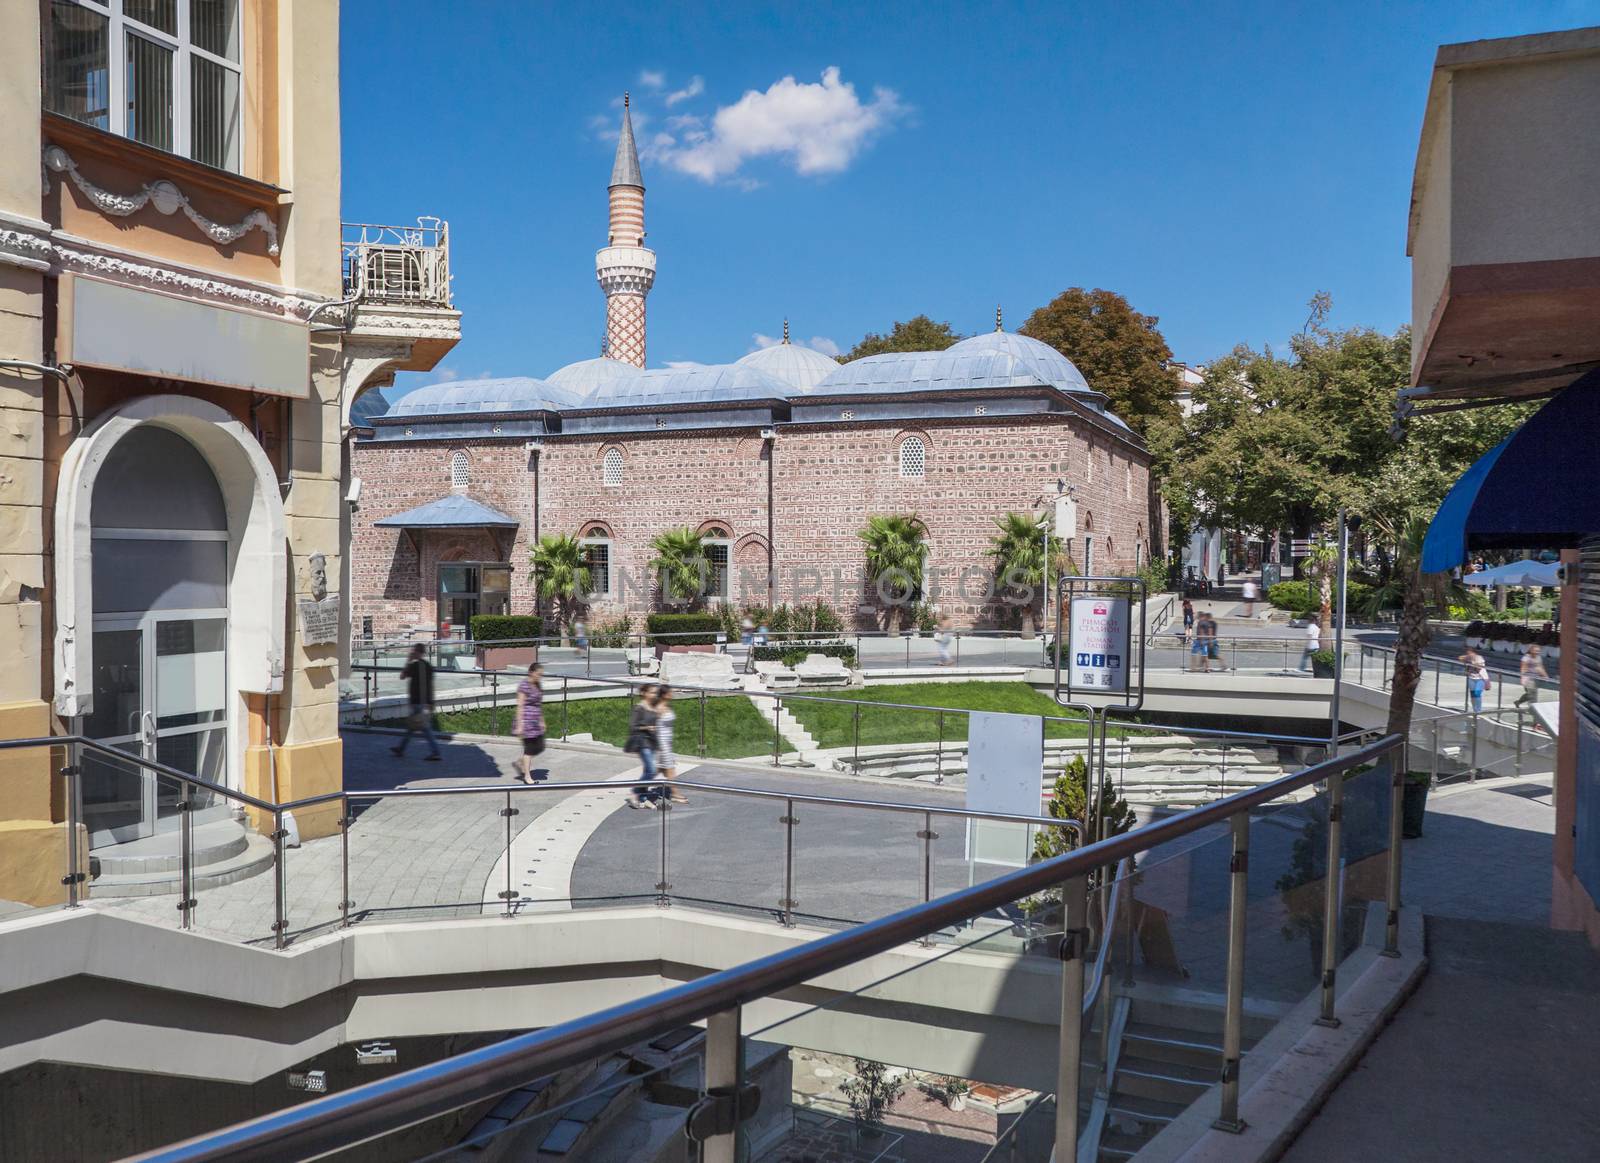 Cuma Camii Dzhumaya Mosque Plovdiv by vilevi